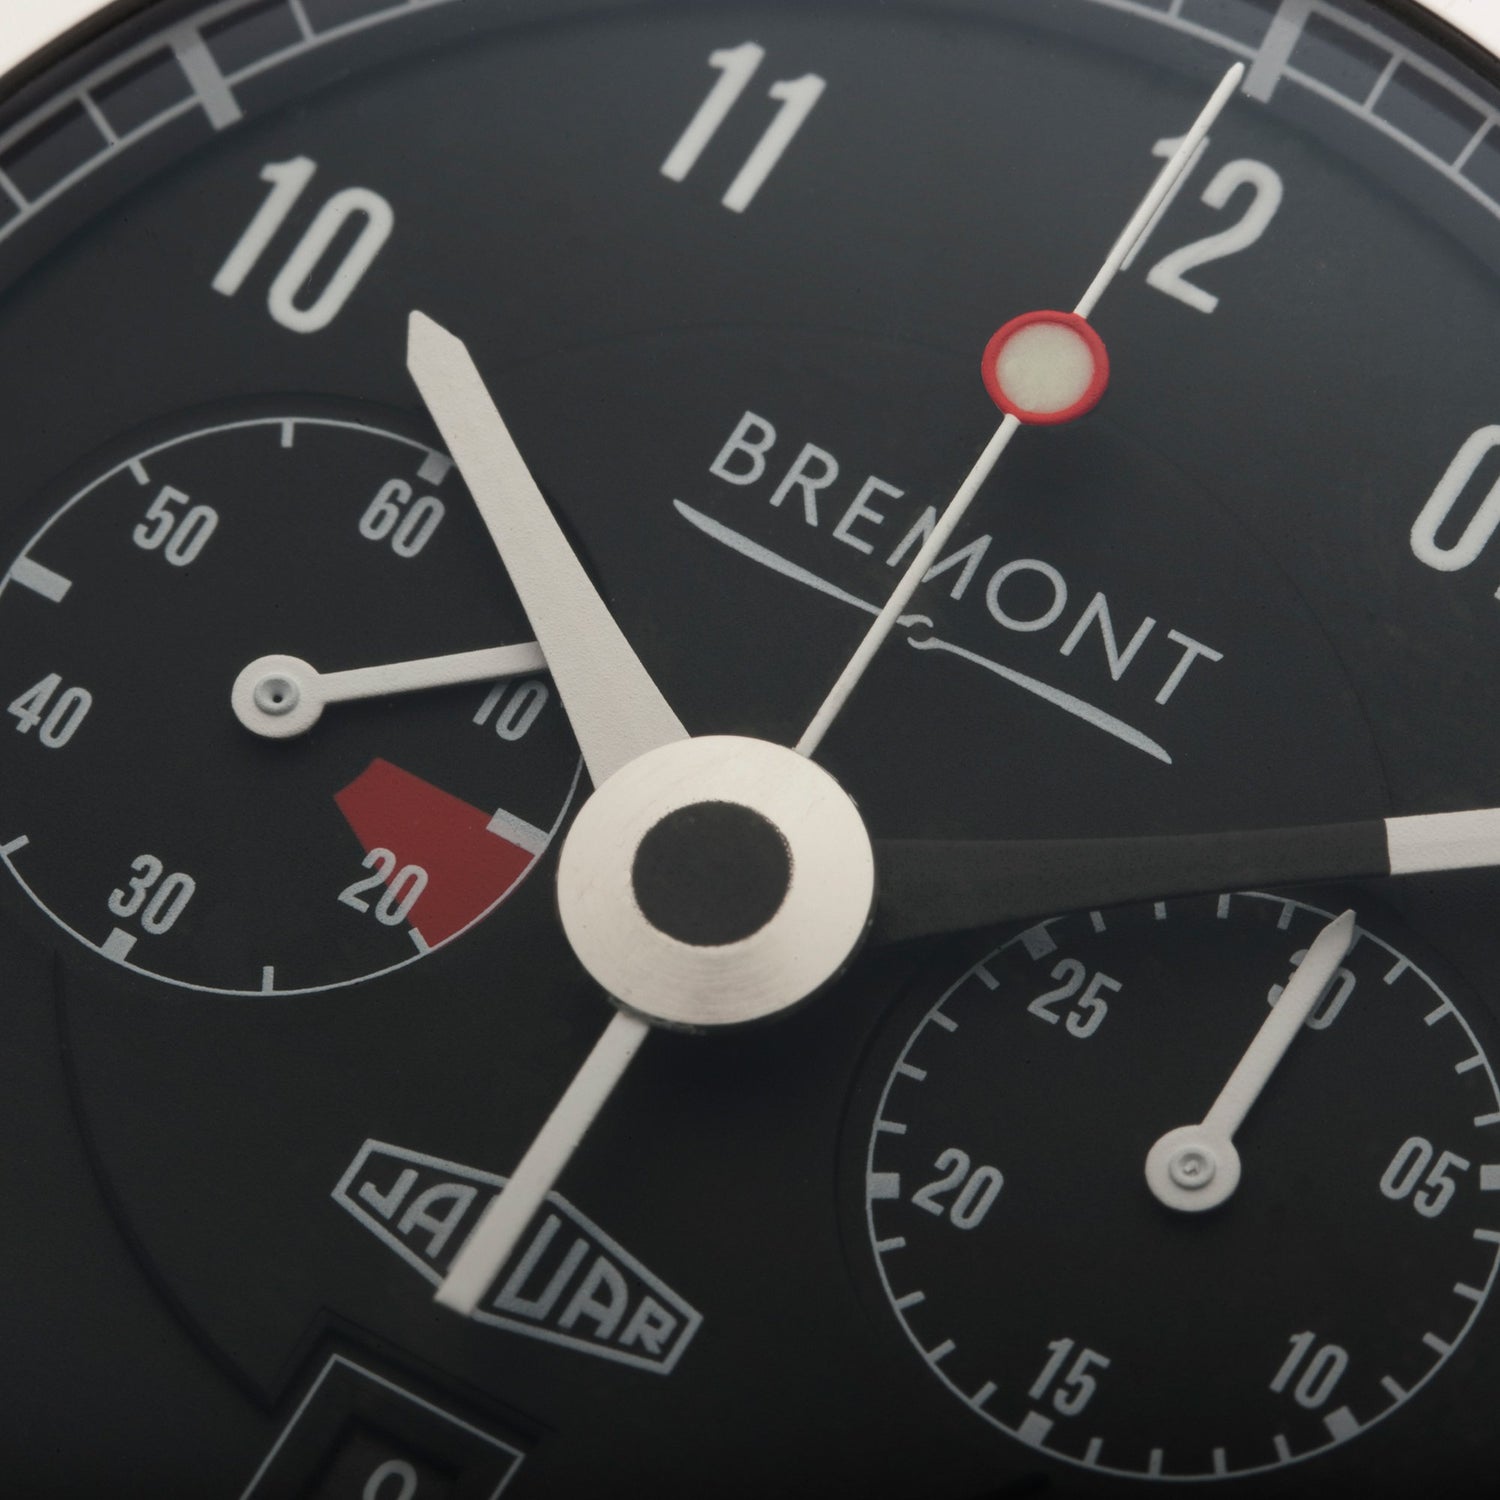 Bremont Chronometers Watches | Mens | Jaguar Jaguar MKII